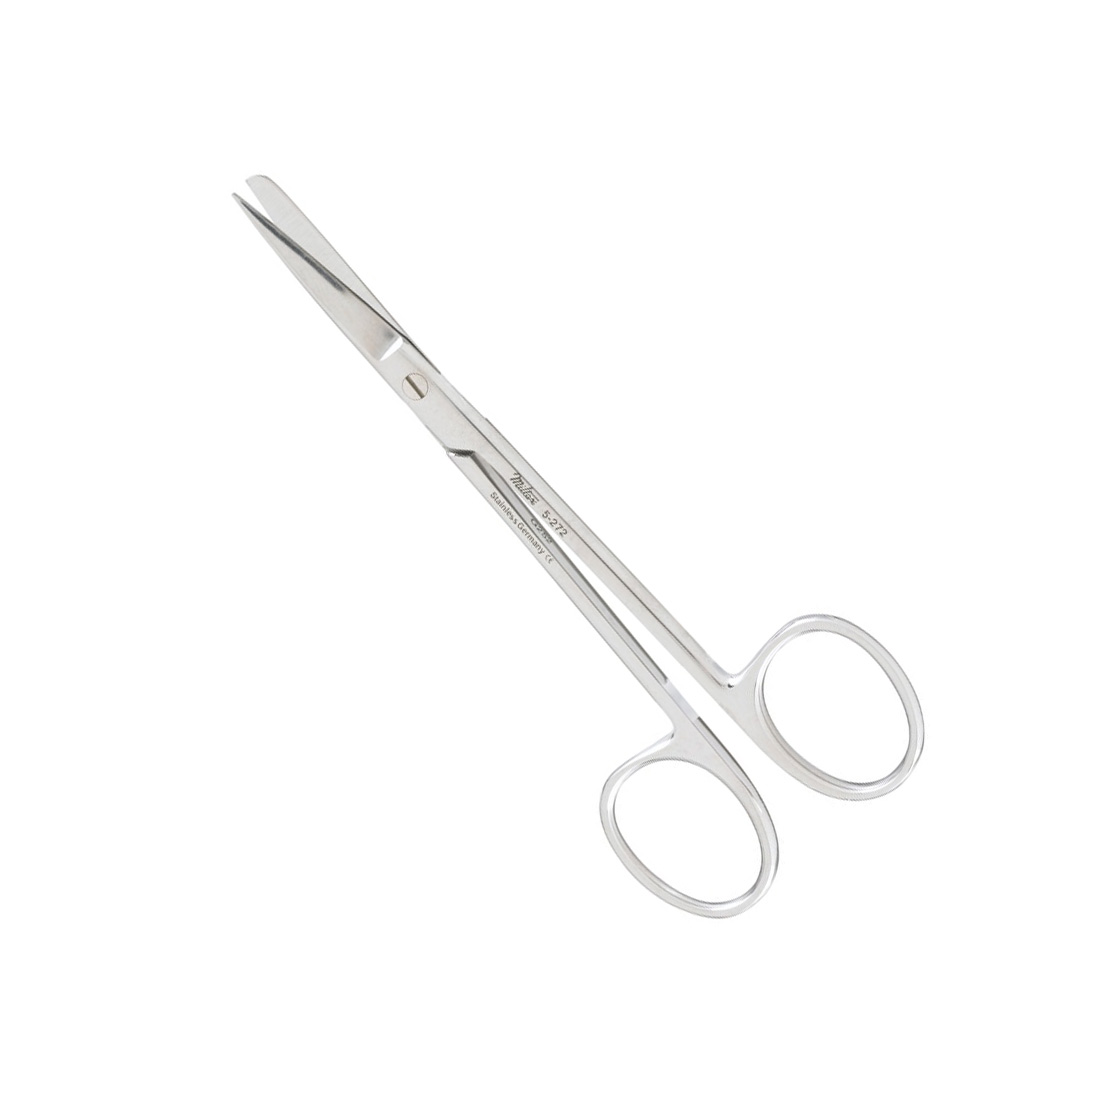 Wagner Plastic Surgery Scissors, Straight,  Sharp-Blunt Points